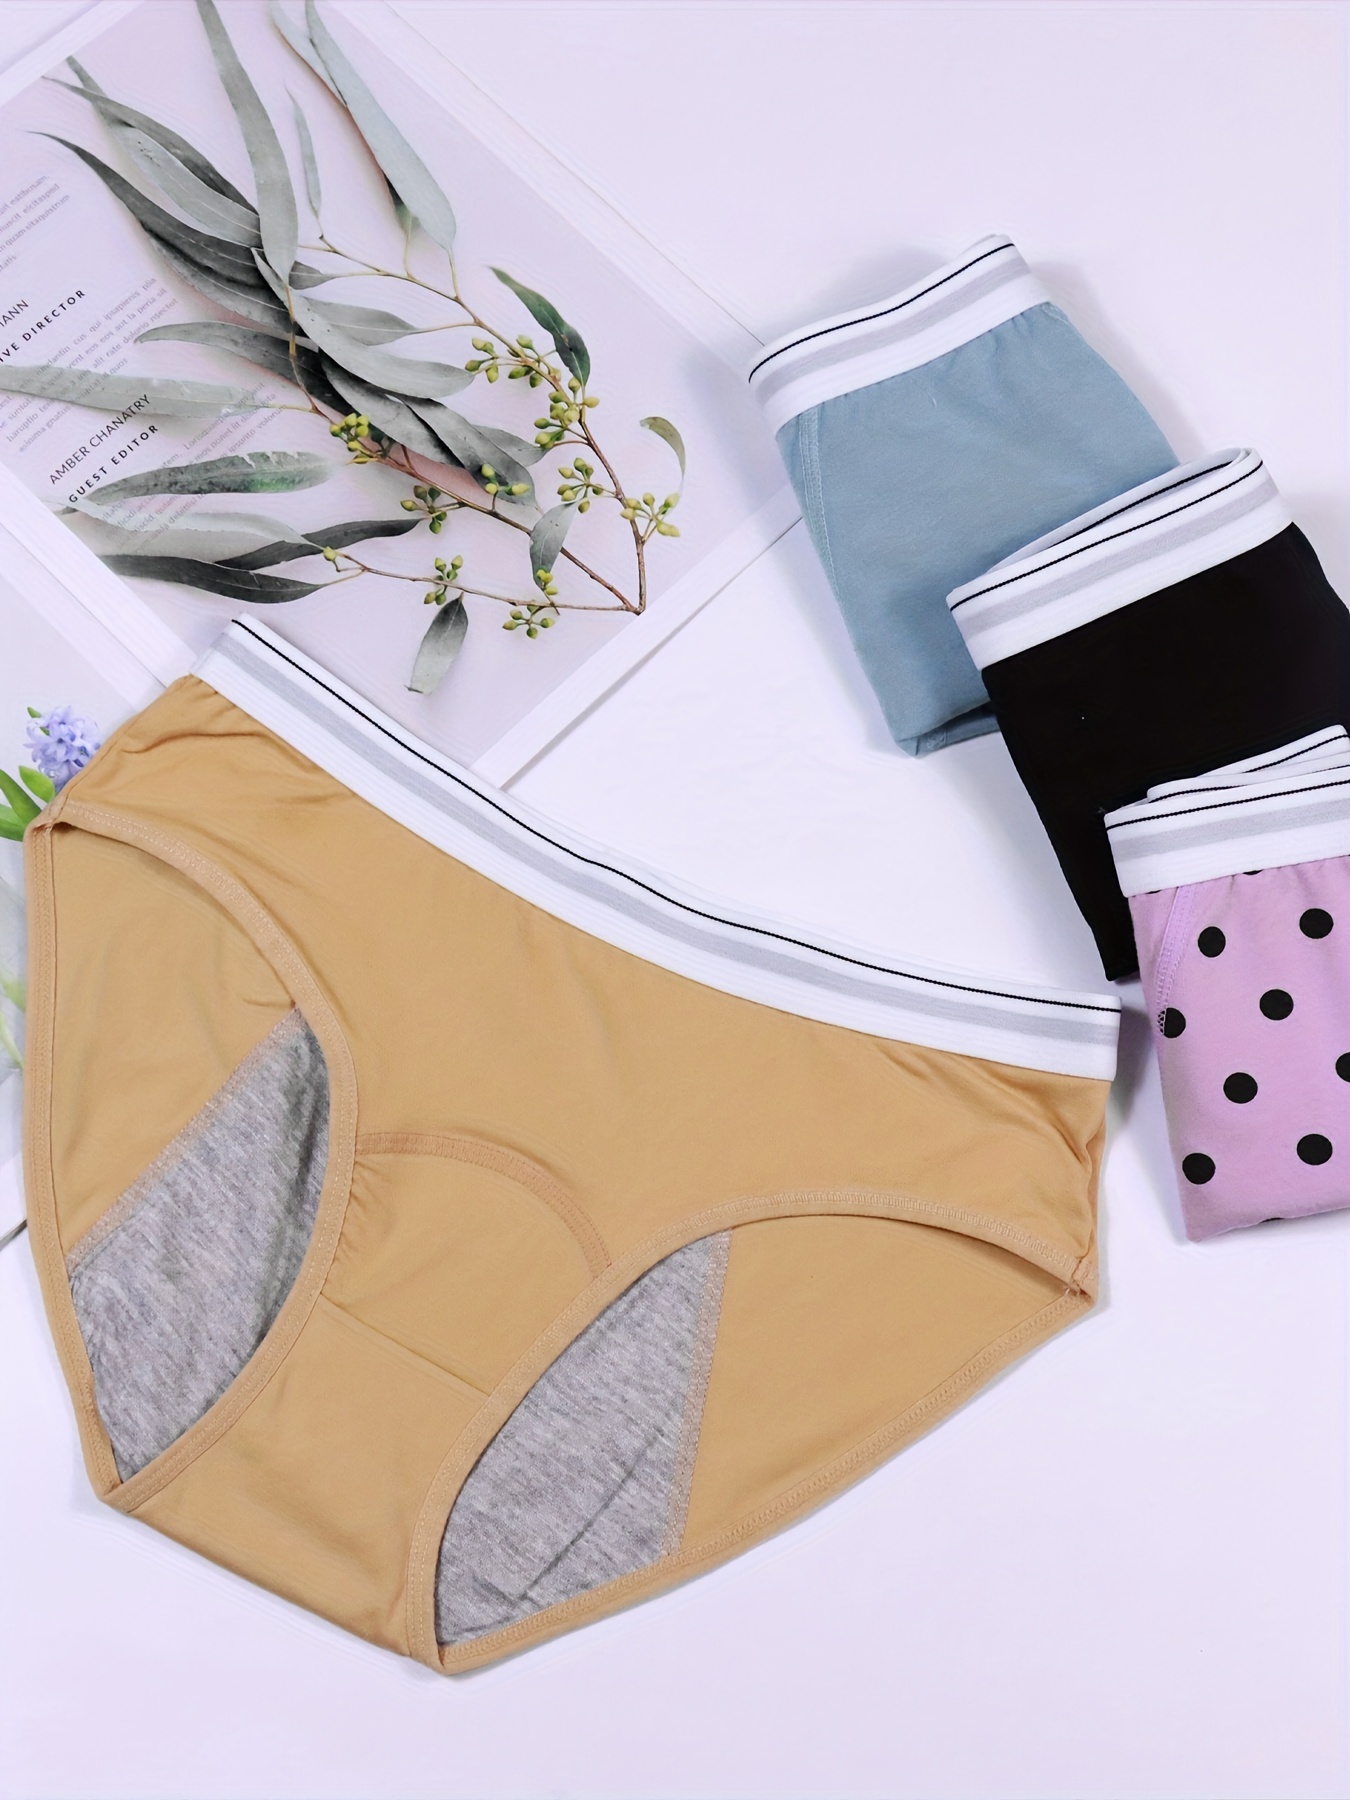 Teen Girls Period Underwear Leakproof Solid Color 95% Cotton